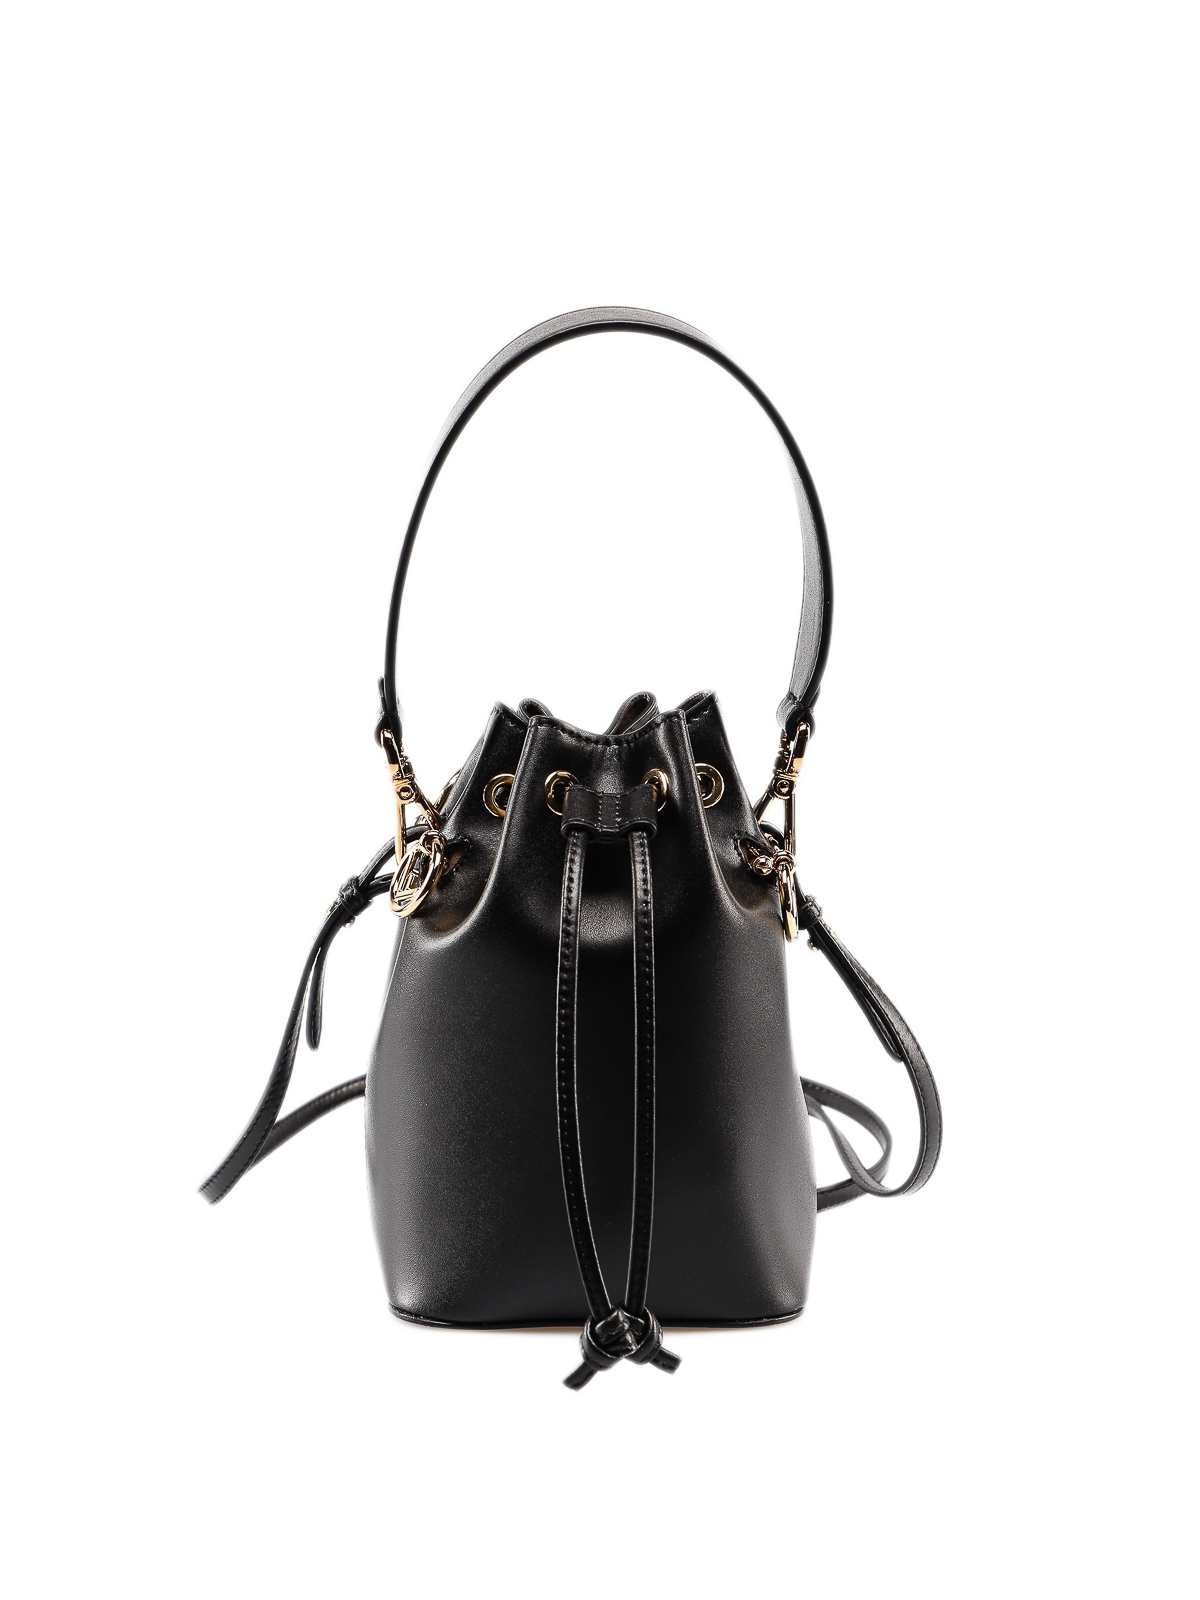 Fendi Mon Tresor Small Bucket Bag in Black